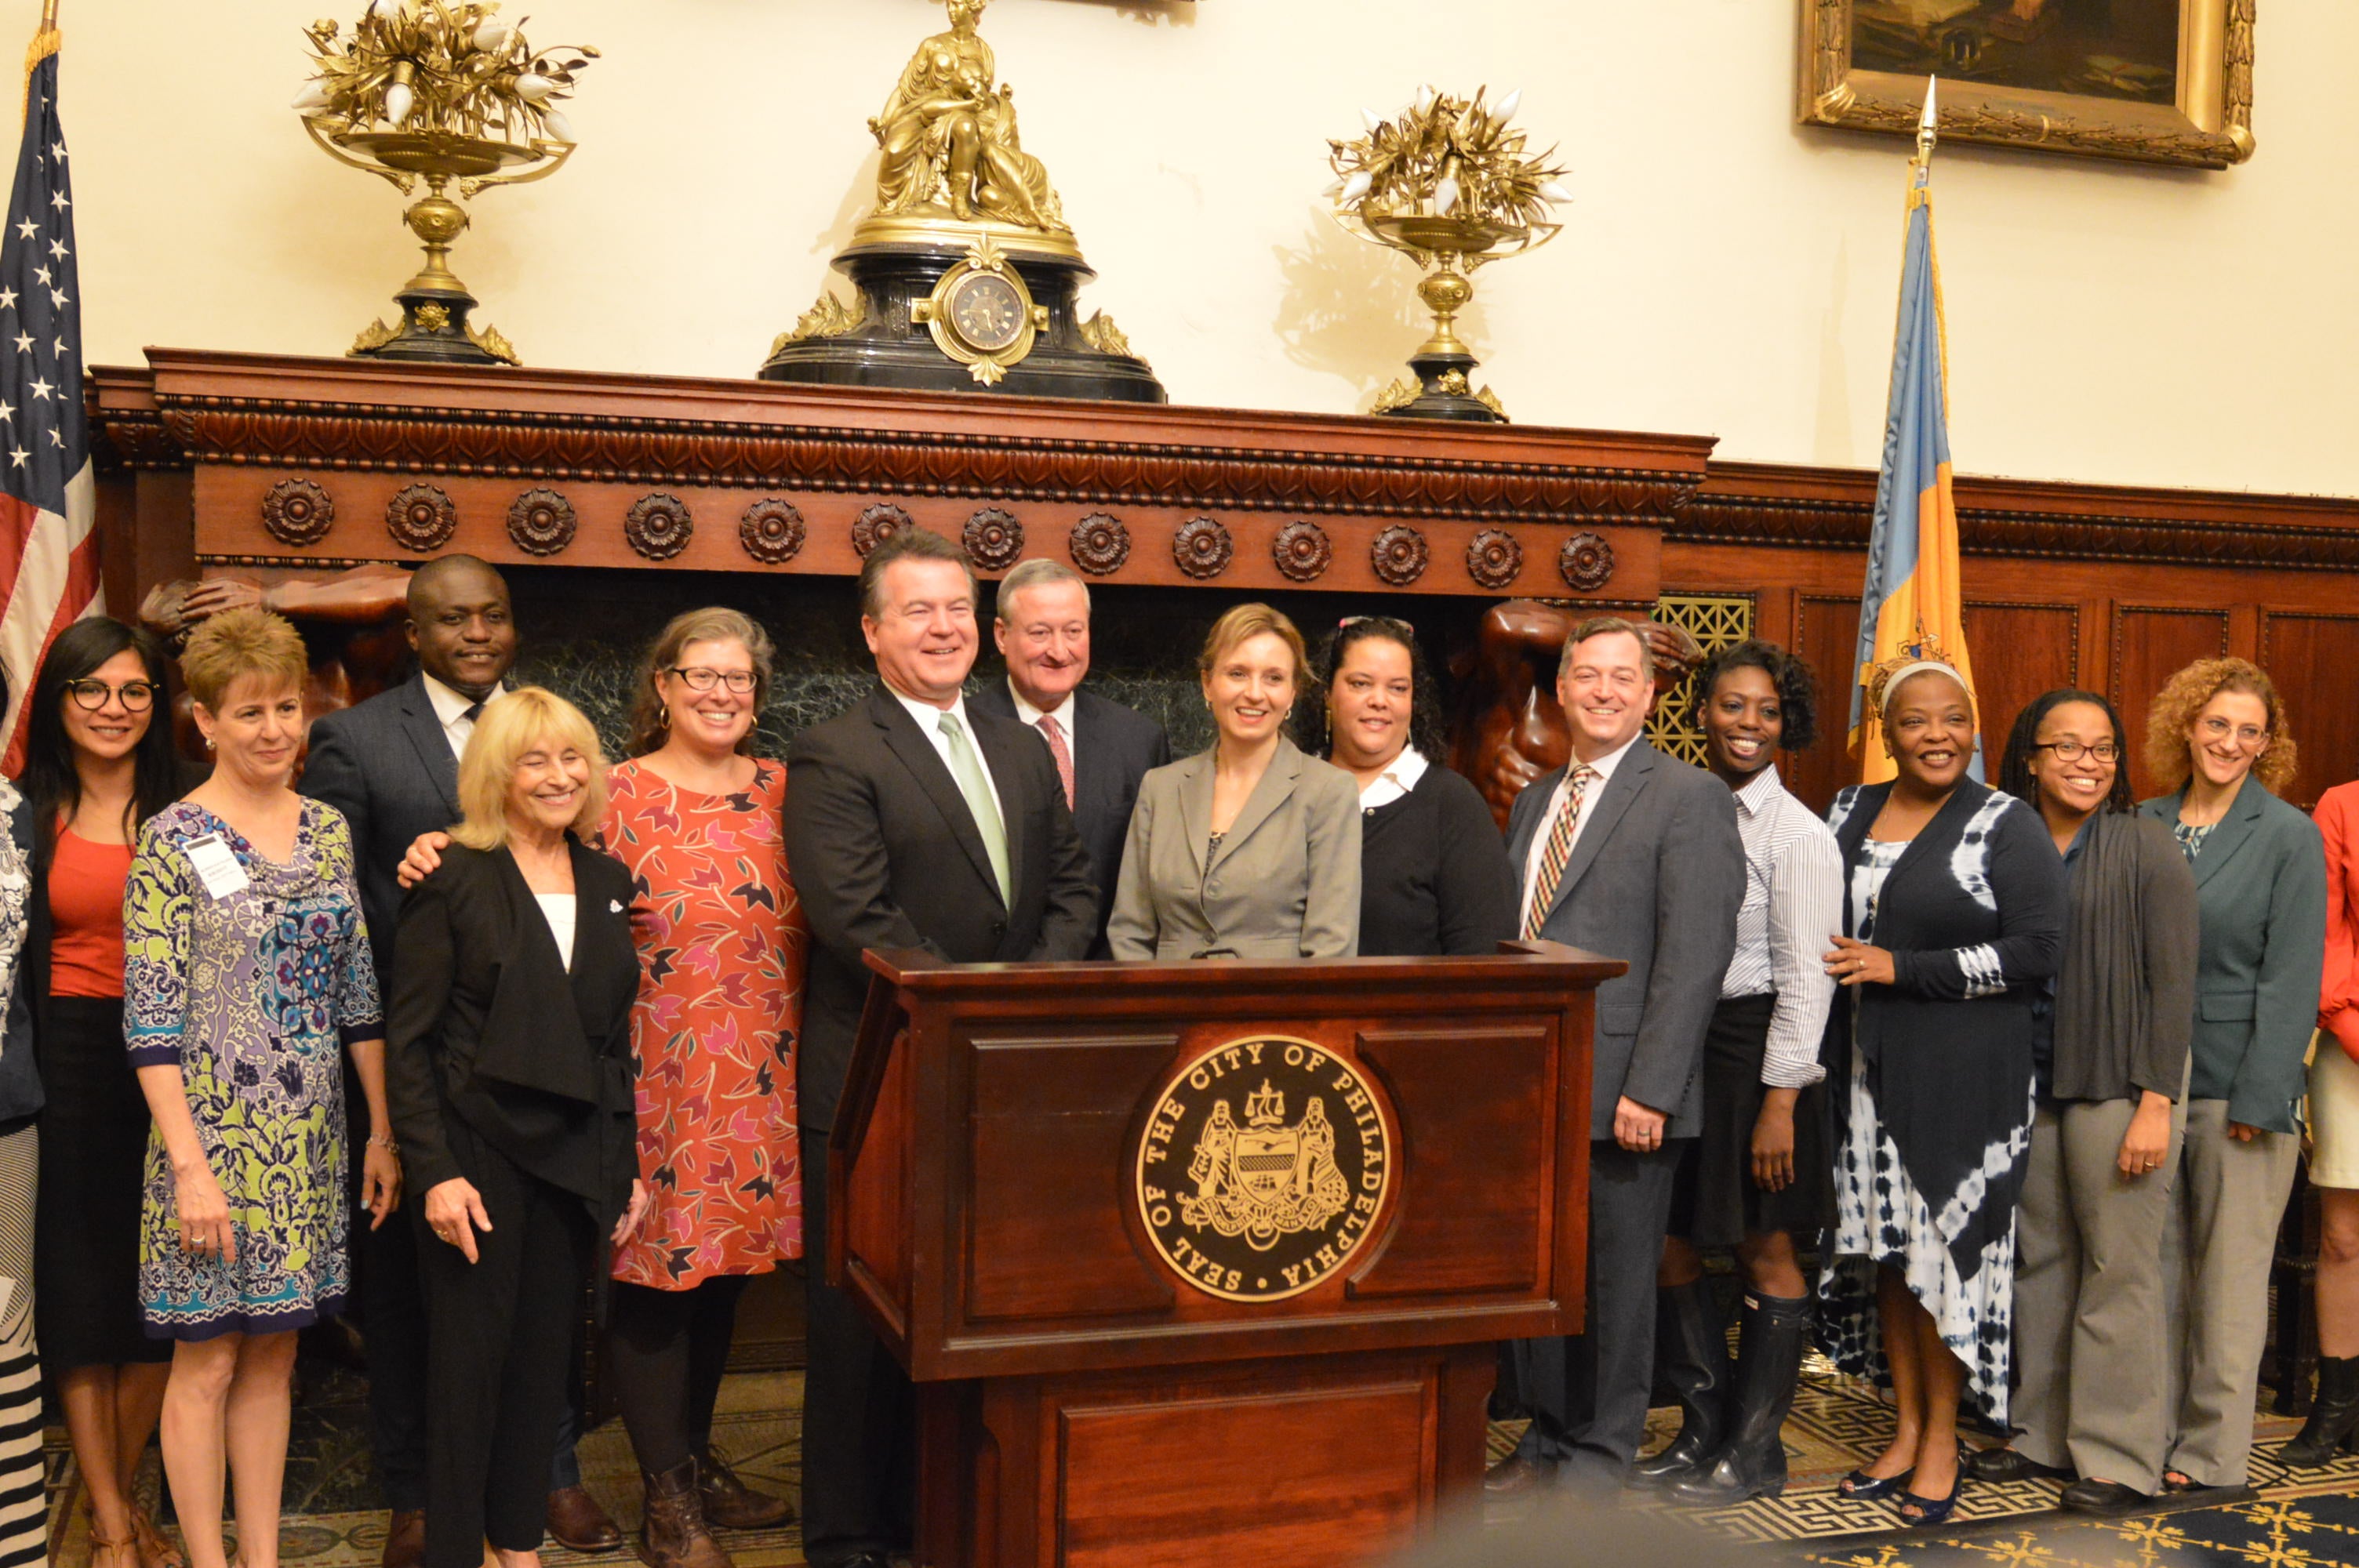  Award winners join Mayor Jim Kenney at a City Hall ceremony Tuesday. (Tom MacDonald/WHYY) 